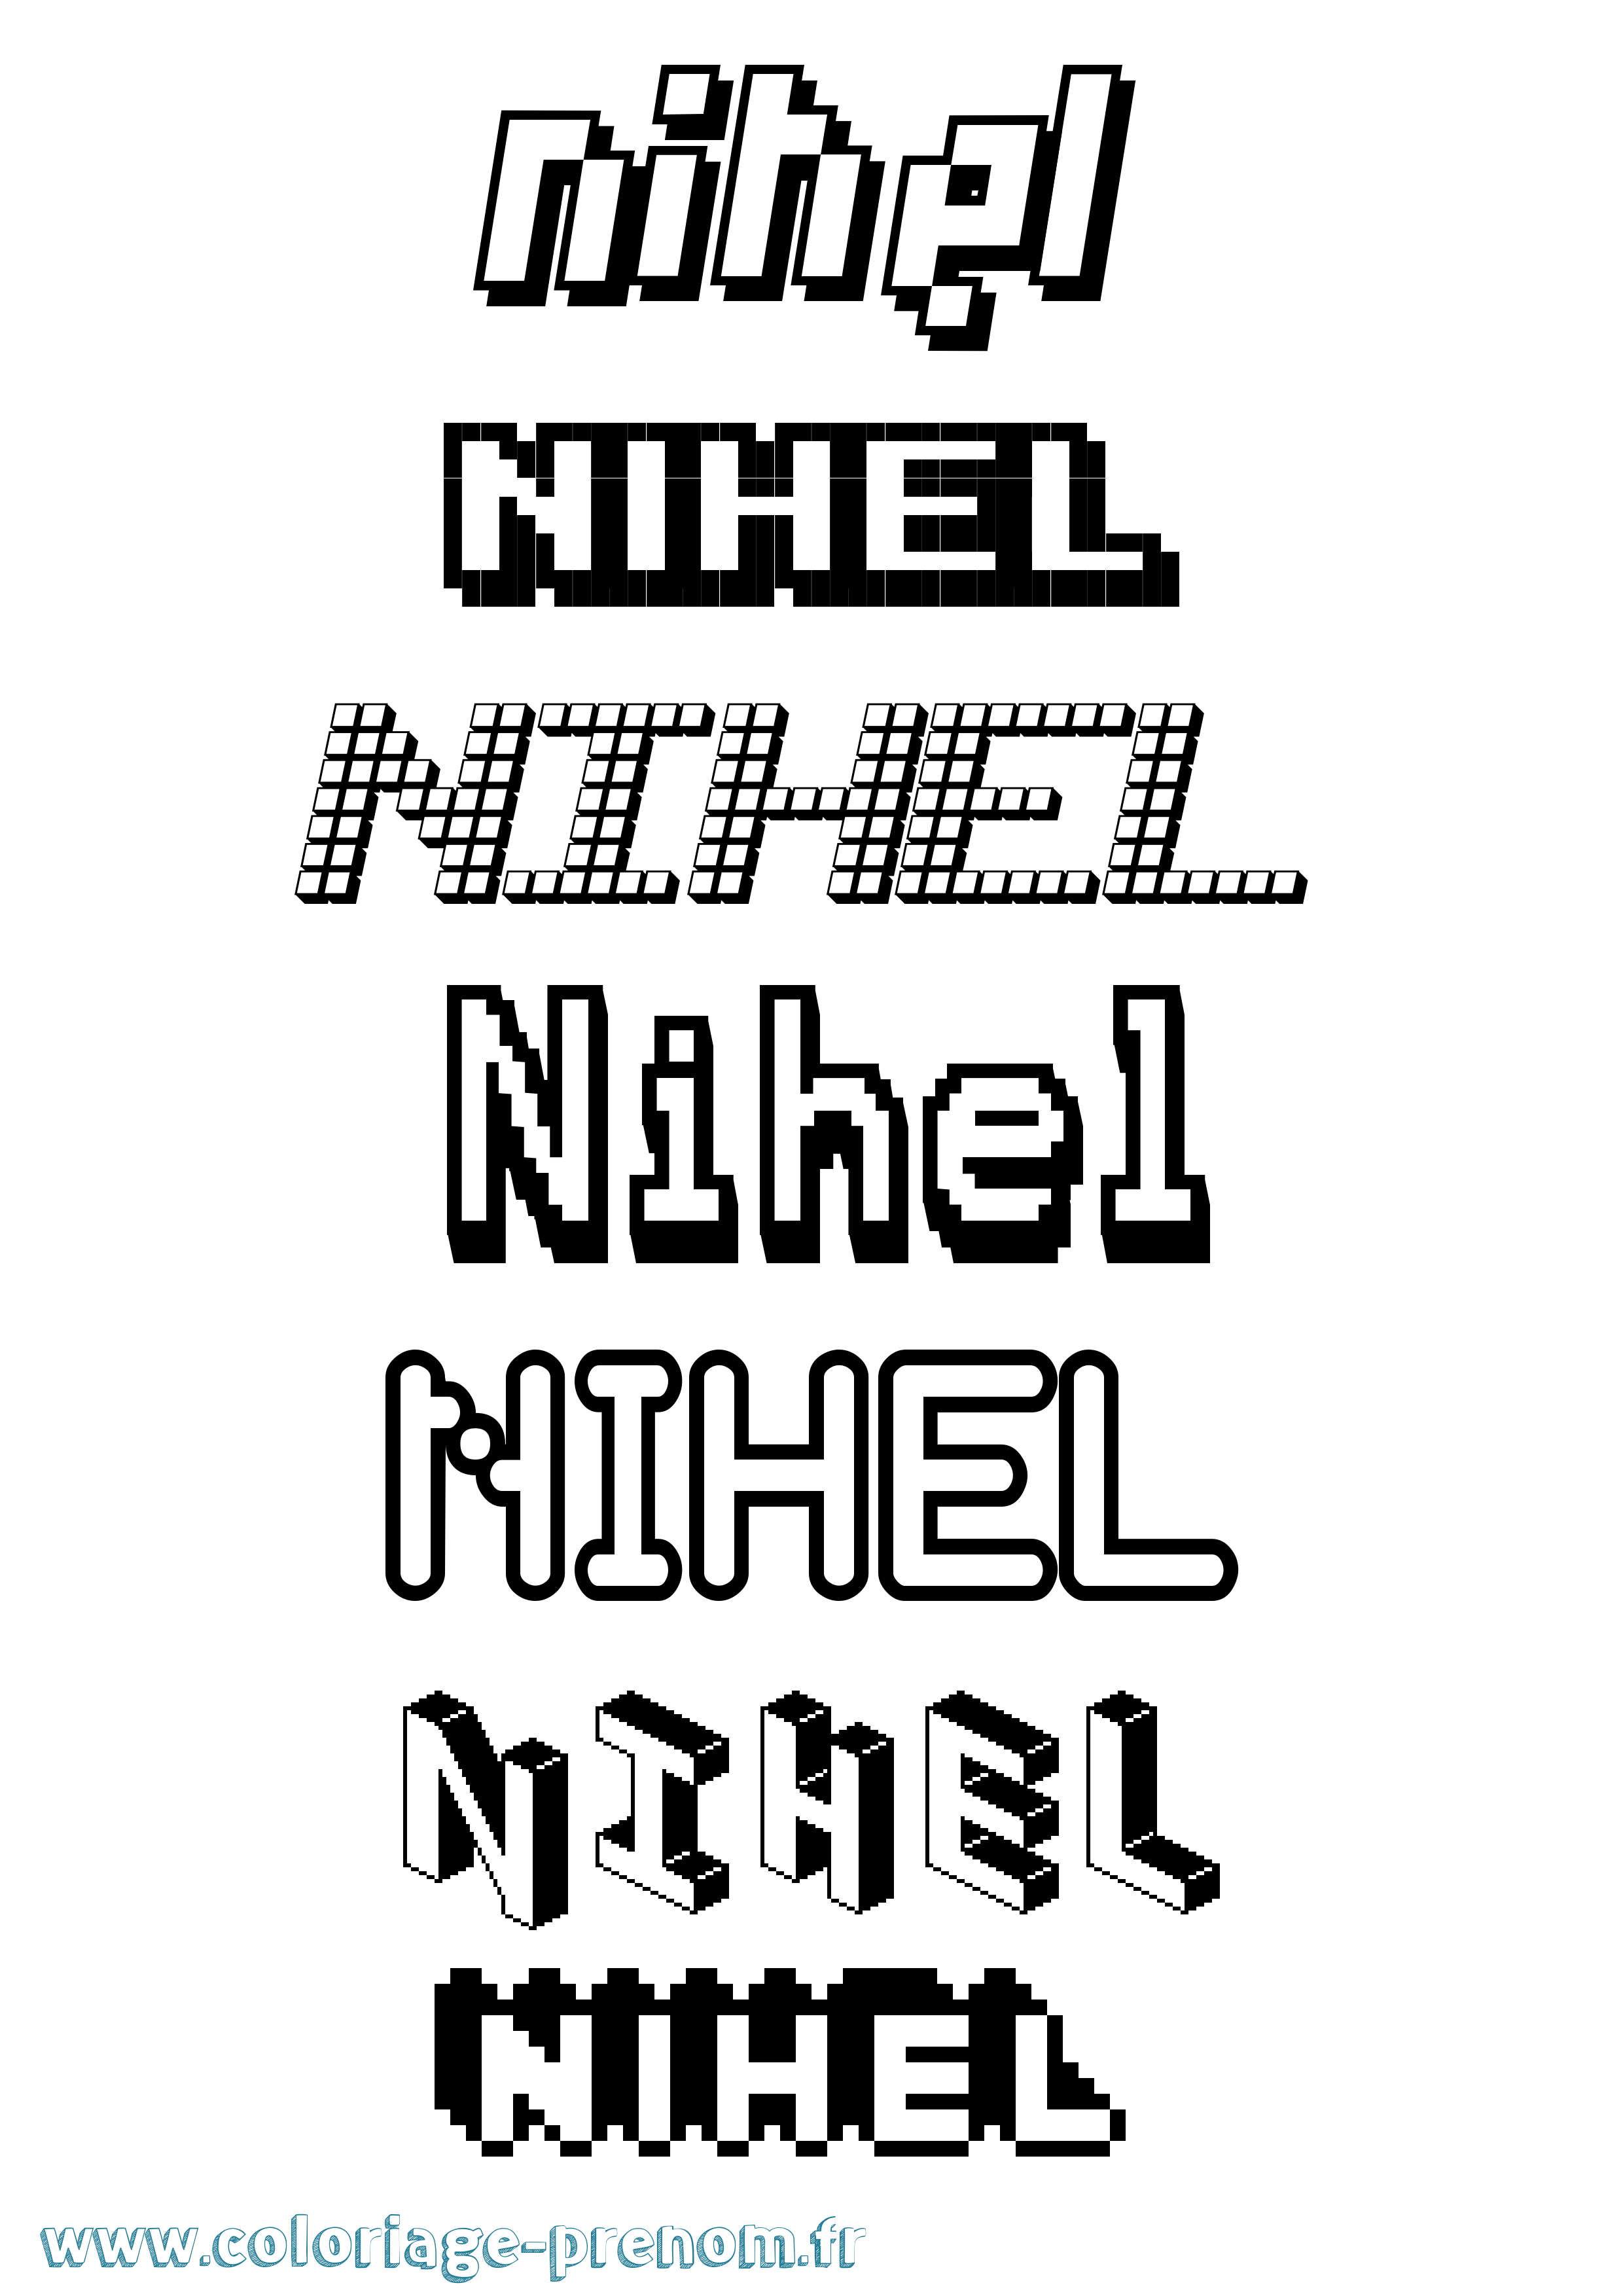 Coloriage prénom Nihel Pixel